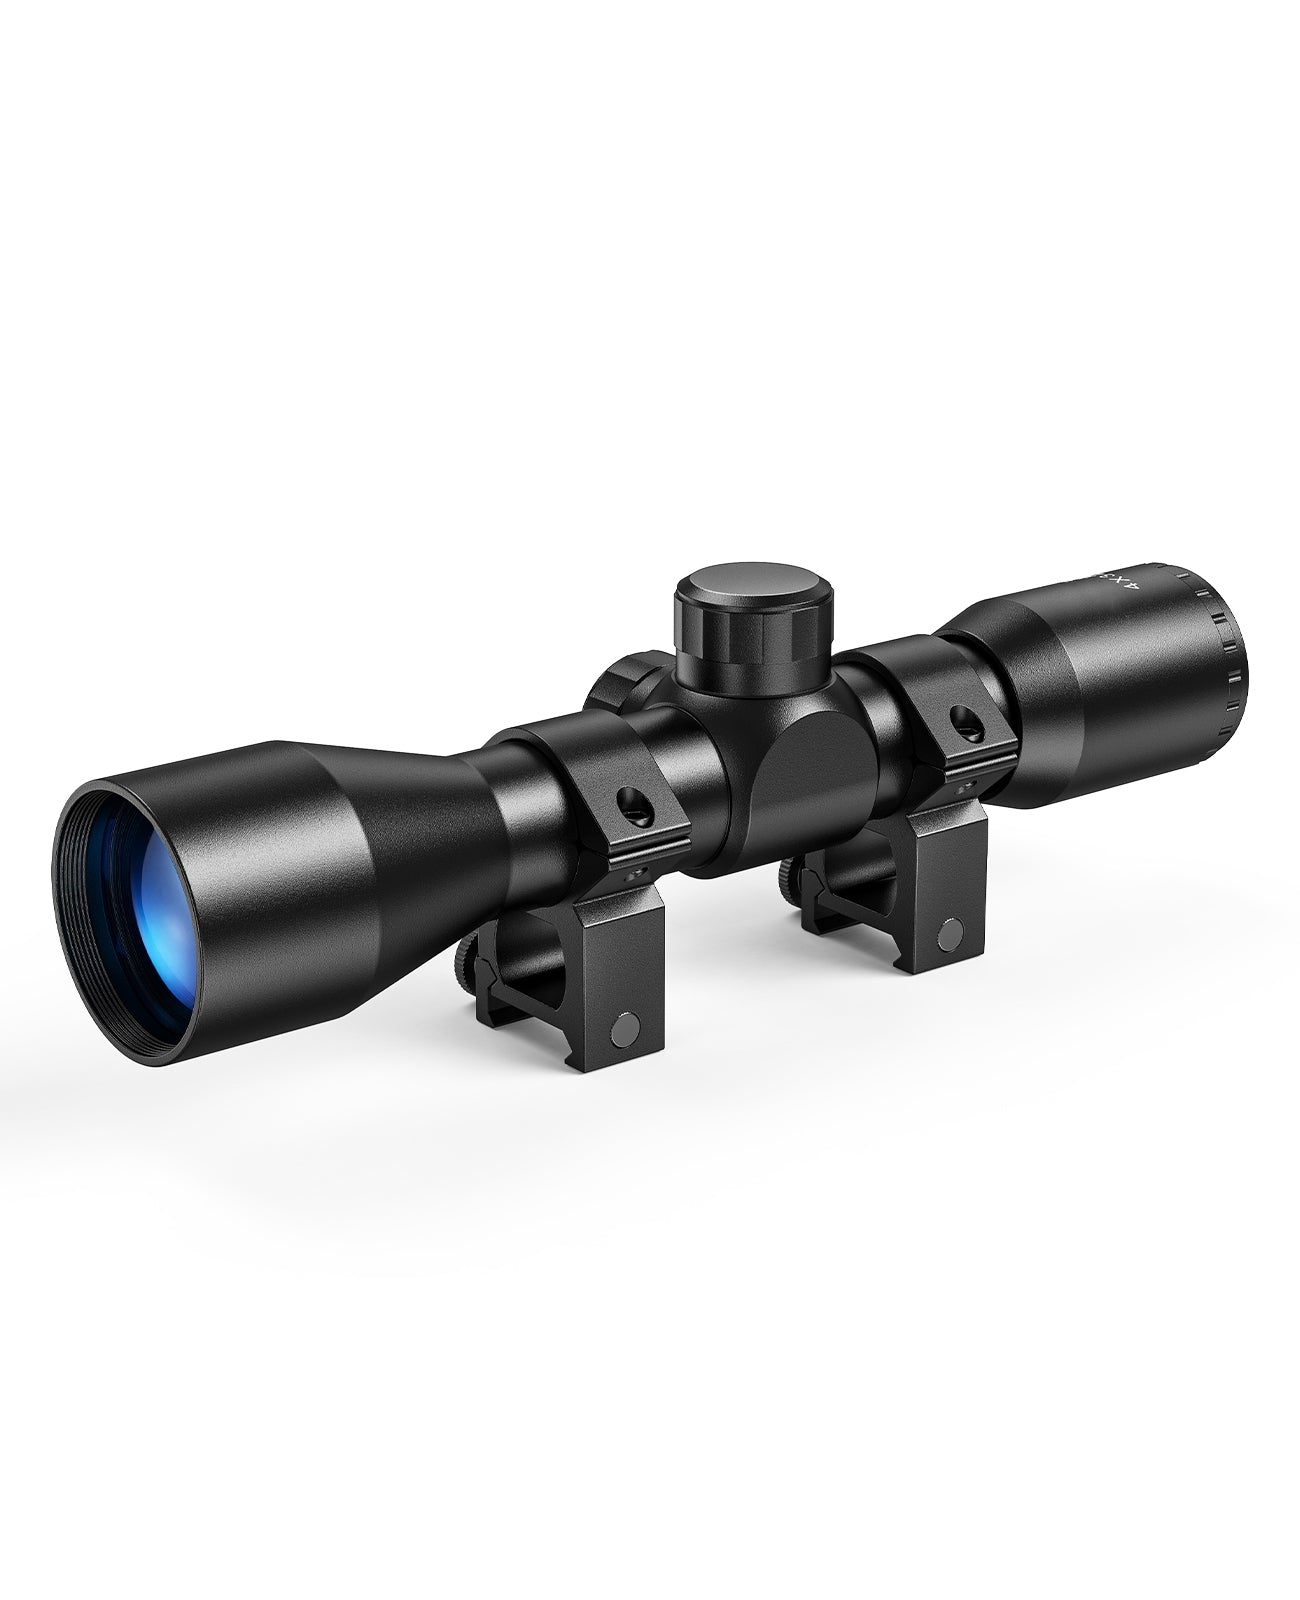 EZshoot 4x32 Compact Rifle Scope Crosshair Optics Hunting Gun Scope